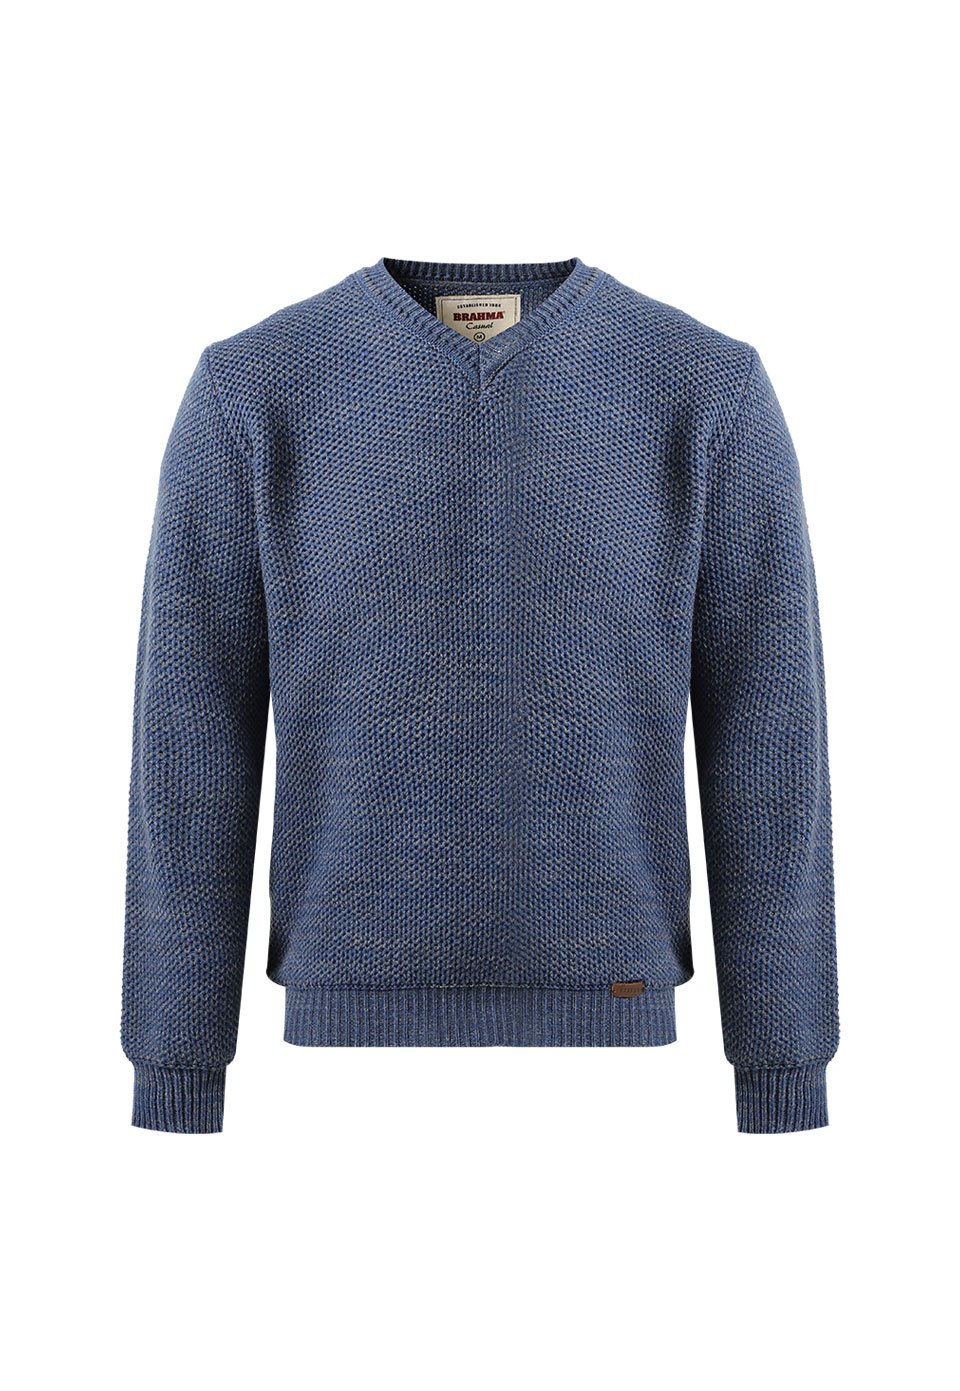 Sweater Basic Urban Hombre Azul